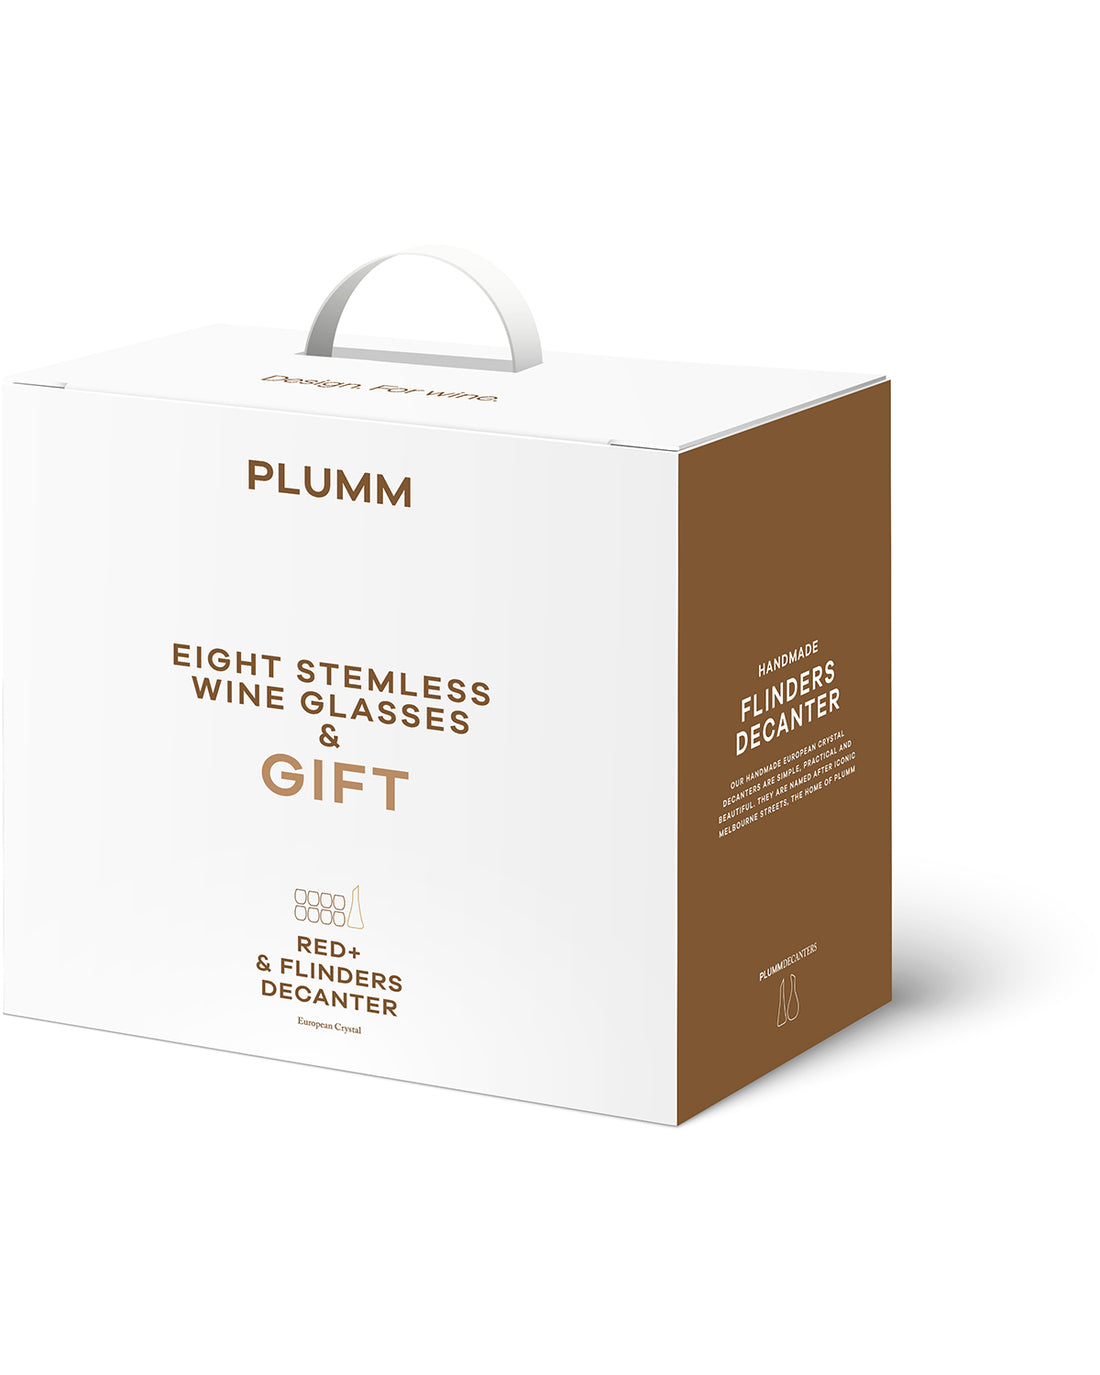 Glass & Flinders Decanter Gift Pack